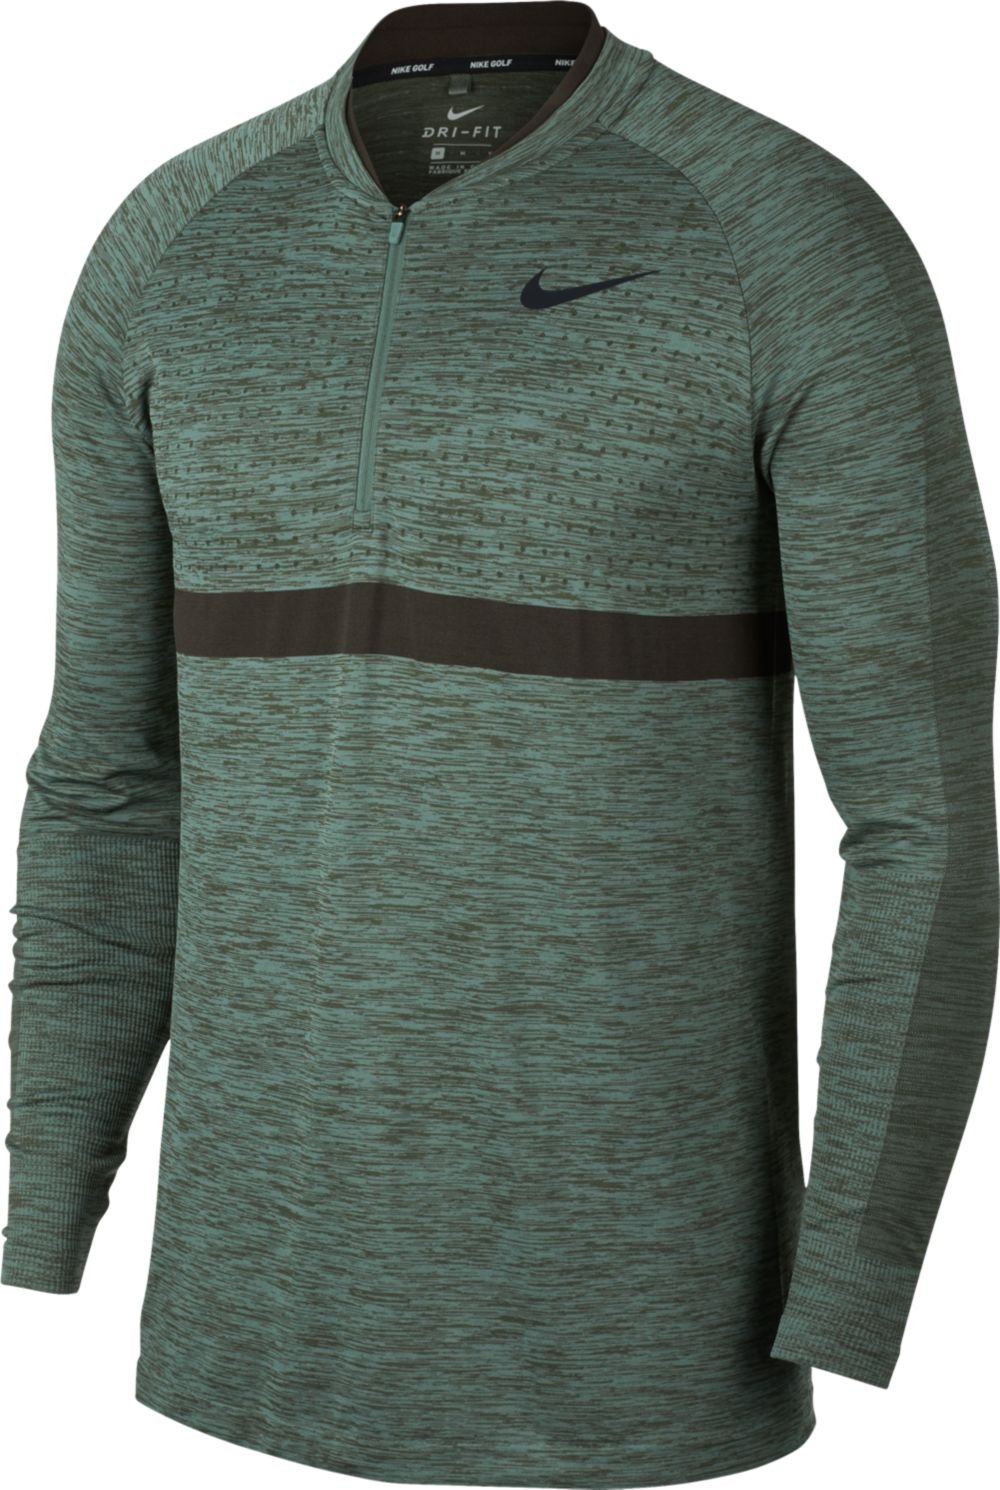 Mens Nike Dri-Fit Seamless Golf Top Pullovers